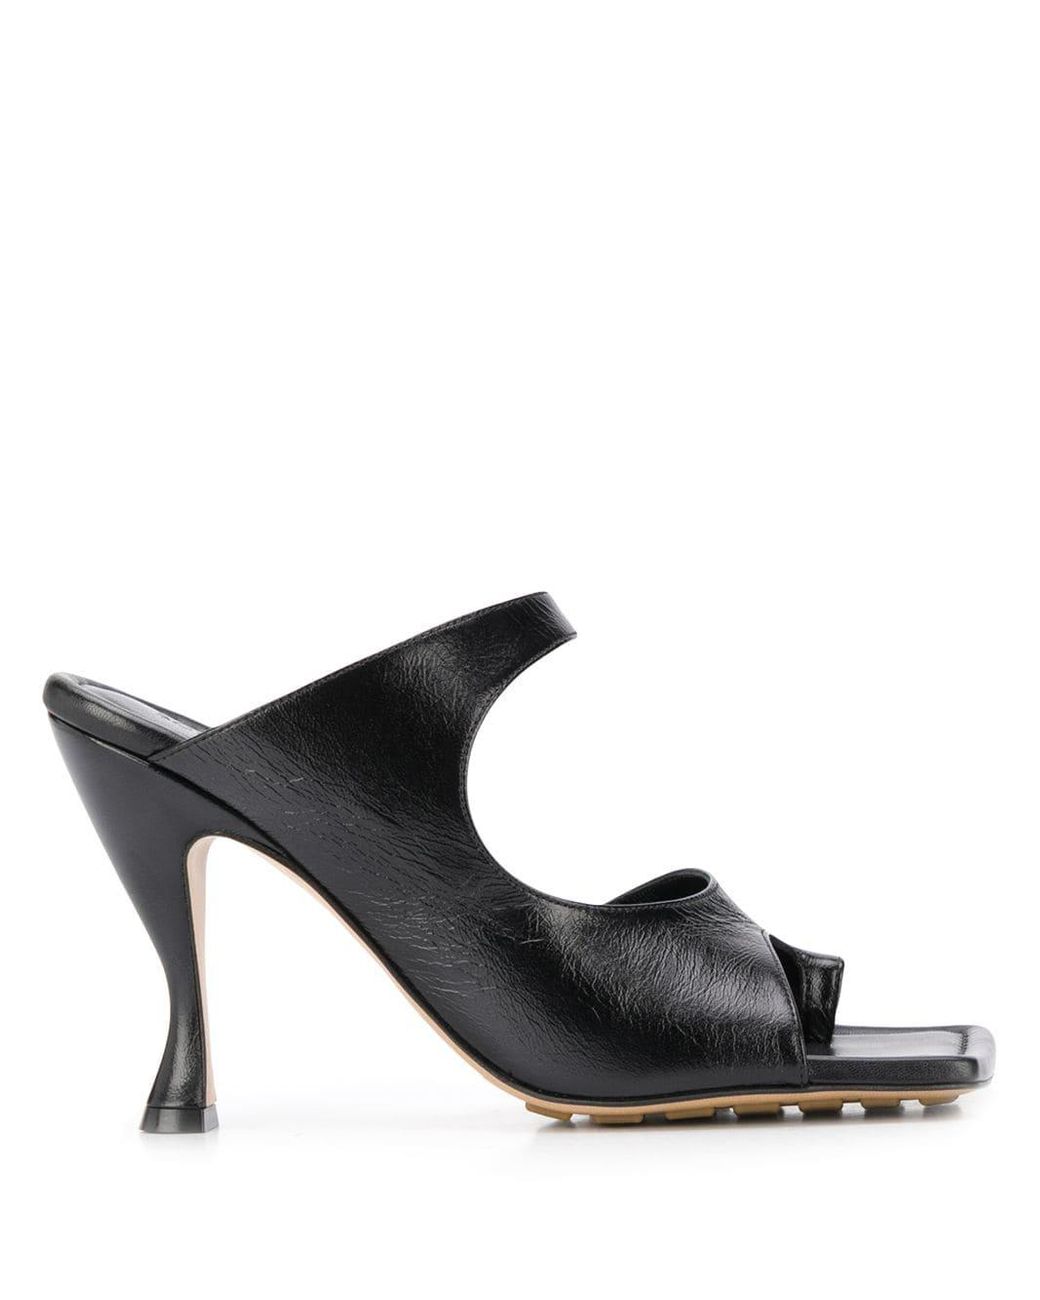 Bottega Veneta Leather Square Toe Strappy 90mm Sandals in Black - Lyst